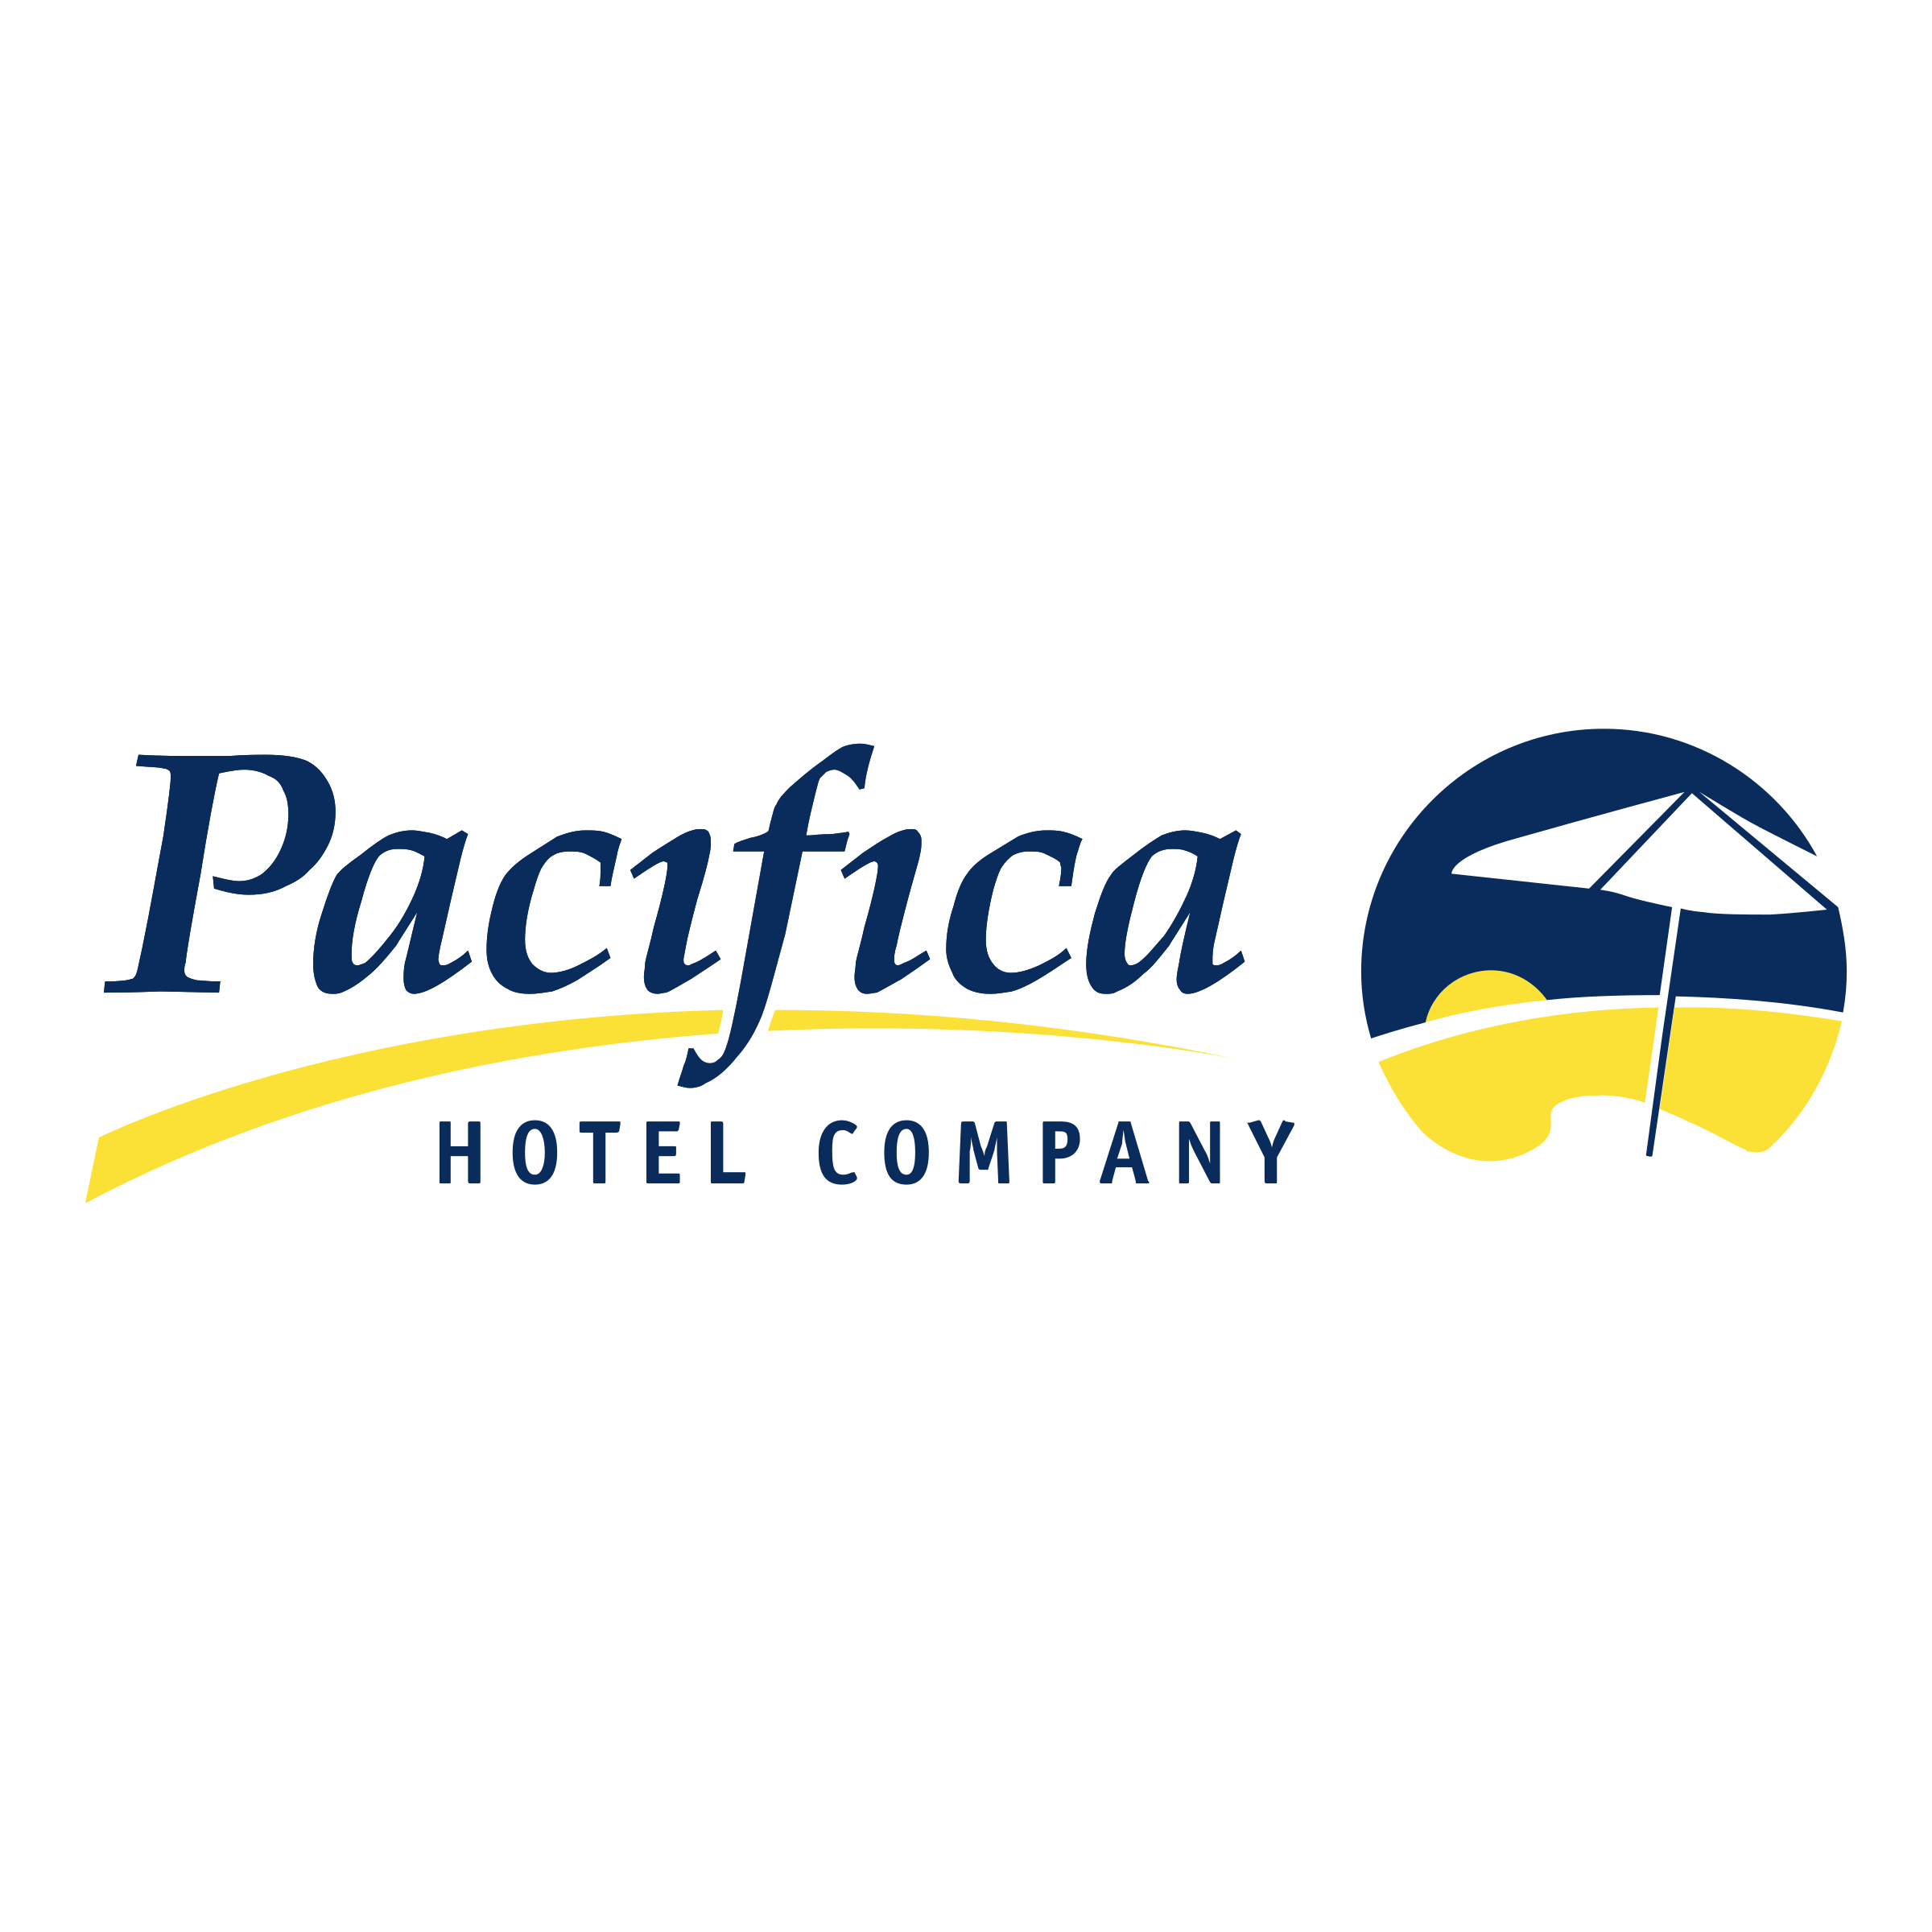 Hotel Company Logo - Pacifica Hotel Company Logo PNG Transparent & SVG Vector